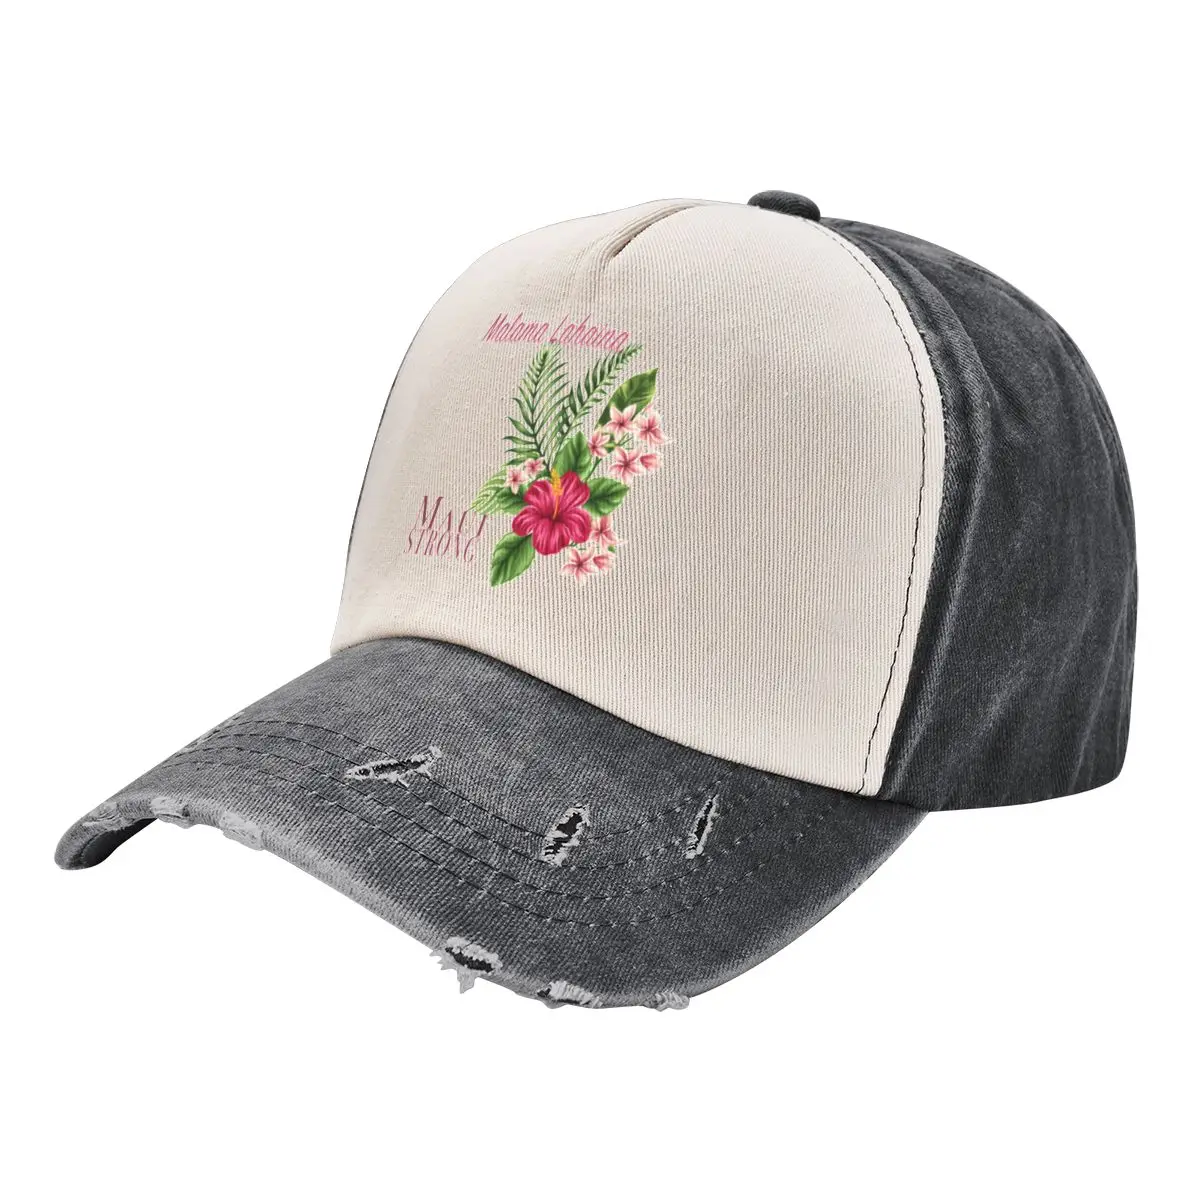 Malama Lahaina - Maui Strong Baseball Cap Snap Back Hat Trucker Cap Luxury Brand cute Women's Beach Outlet Men's